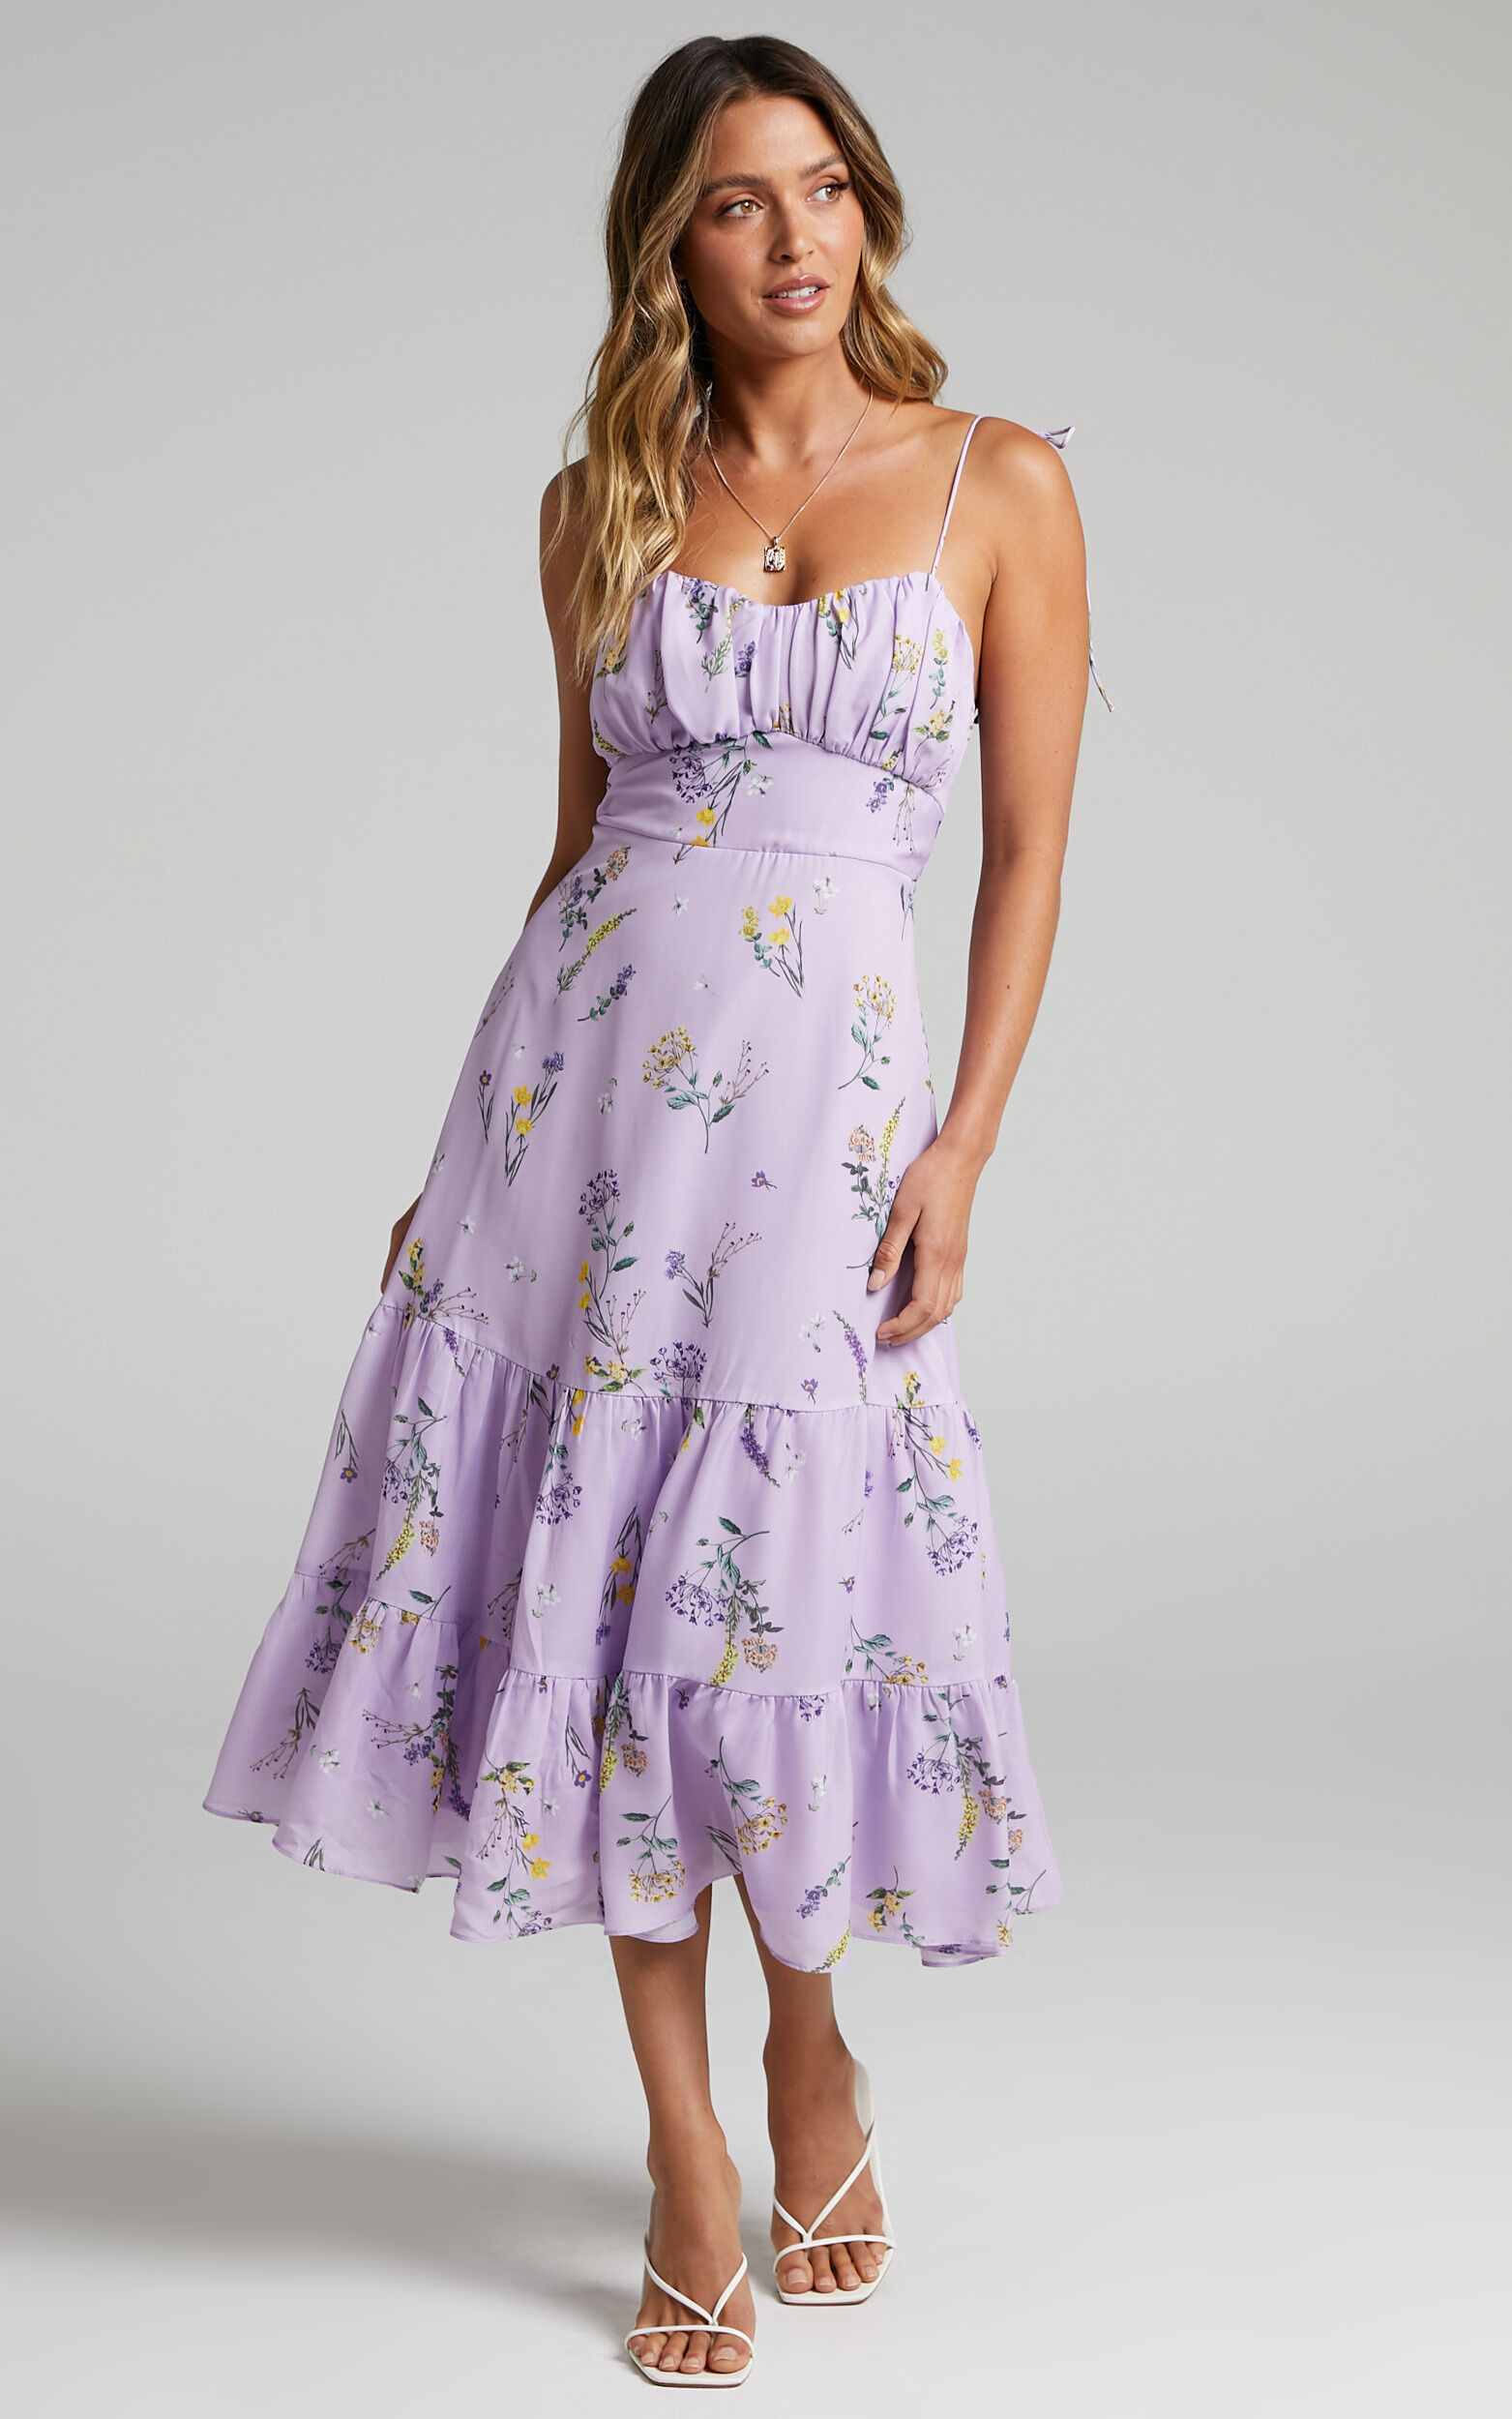 Monaco Sweetheart Midi Dress in Lavender Botanical Floral | Showpo